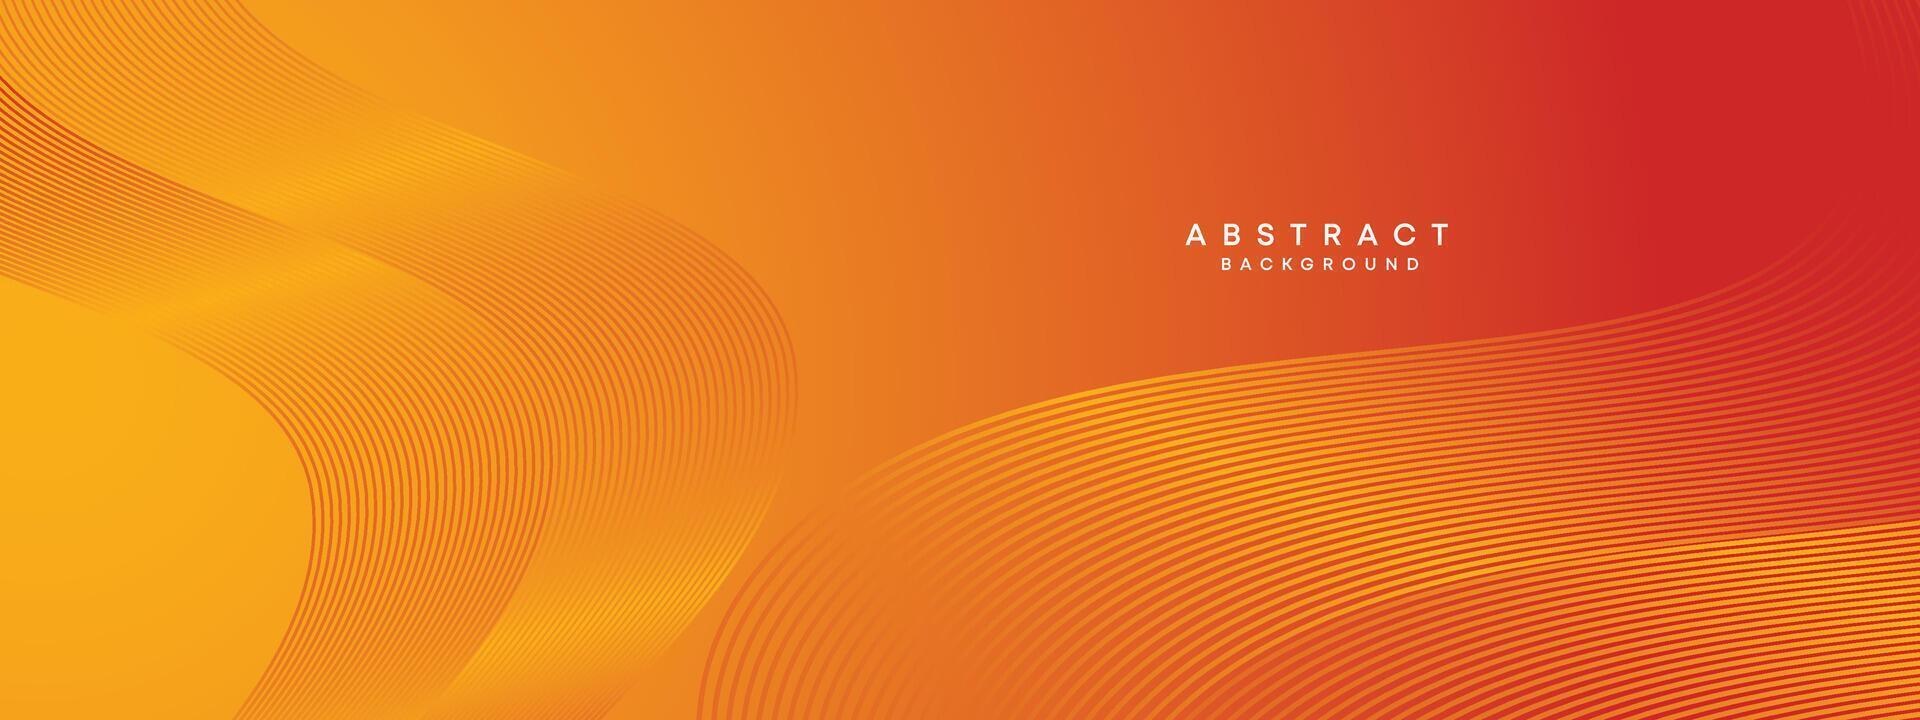 abstrakt röd, orange vinka cirklar rader teknologi bakgrund. modern orange lutning med lysande rader, skinande geometrisk form diagonal. för broschyr, omslag, affisch, baner, hemsida, rubrik, flygblad vektor